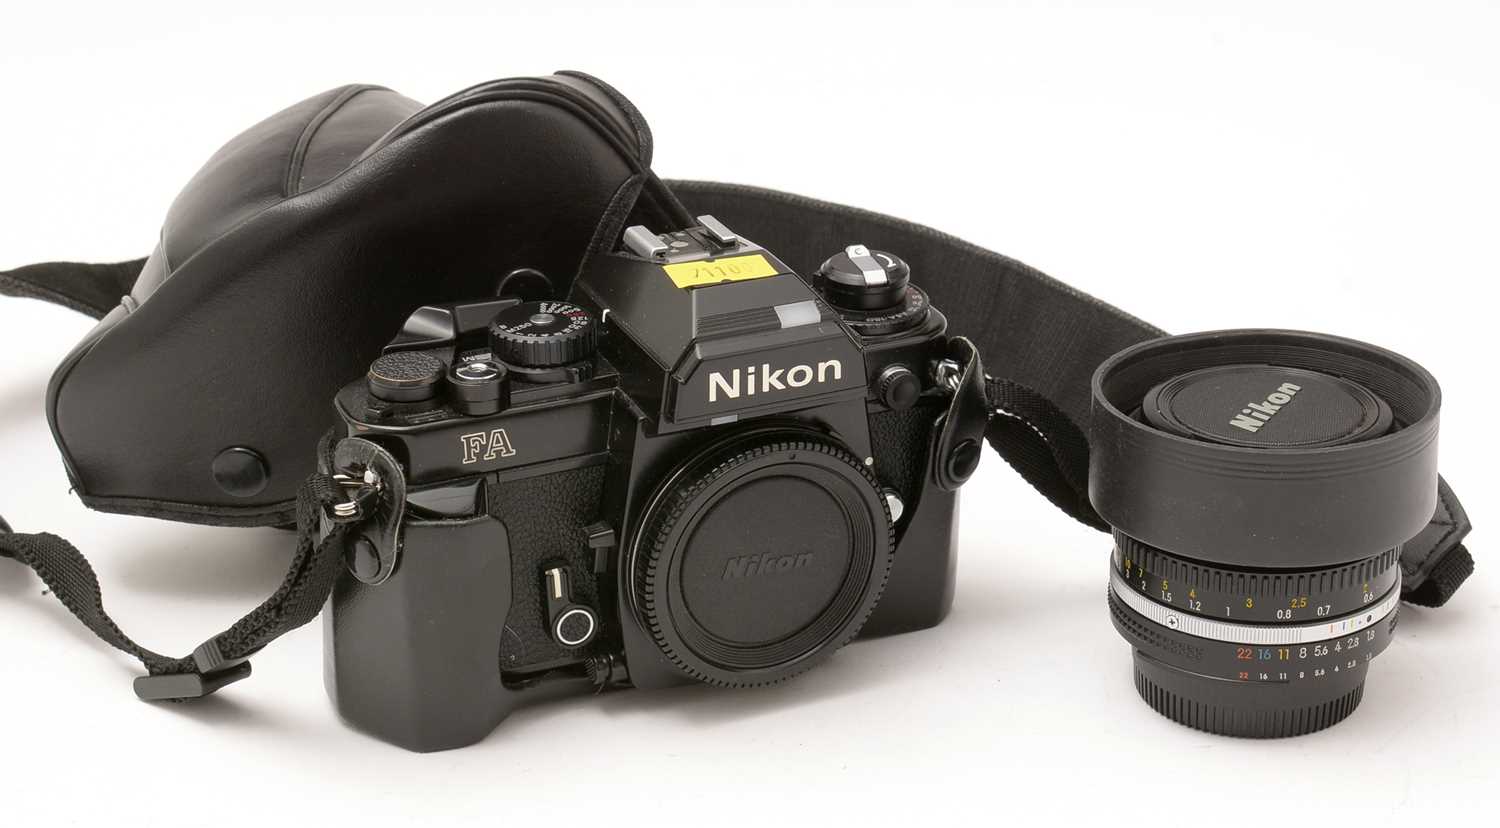 357 - A Nikon camera and lens.